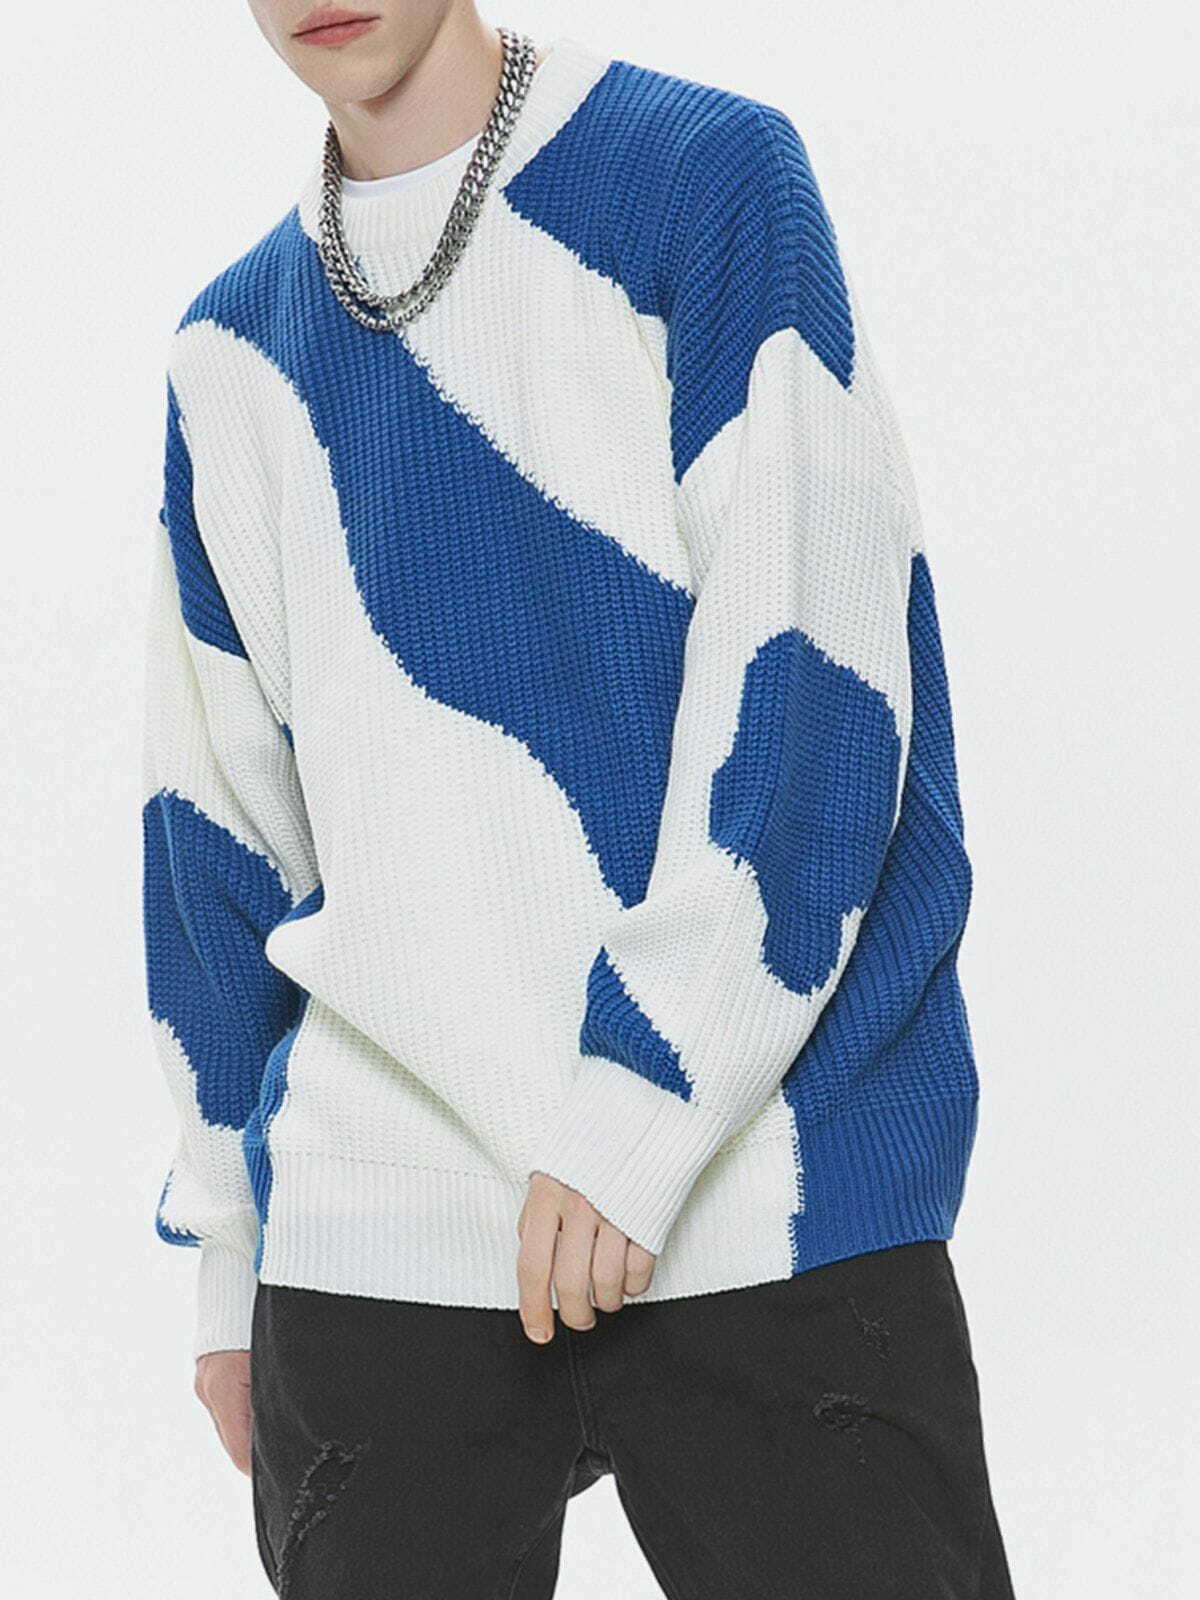 irregular contrast sweater edgy & urban streetwear icon 7242